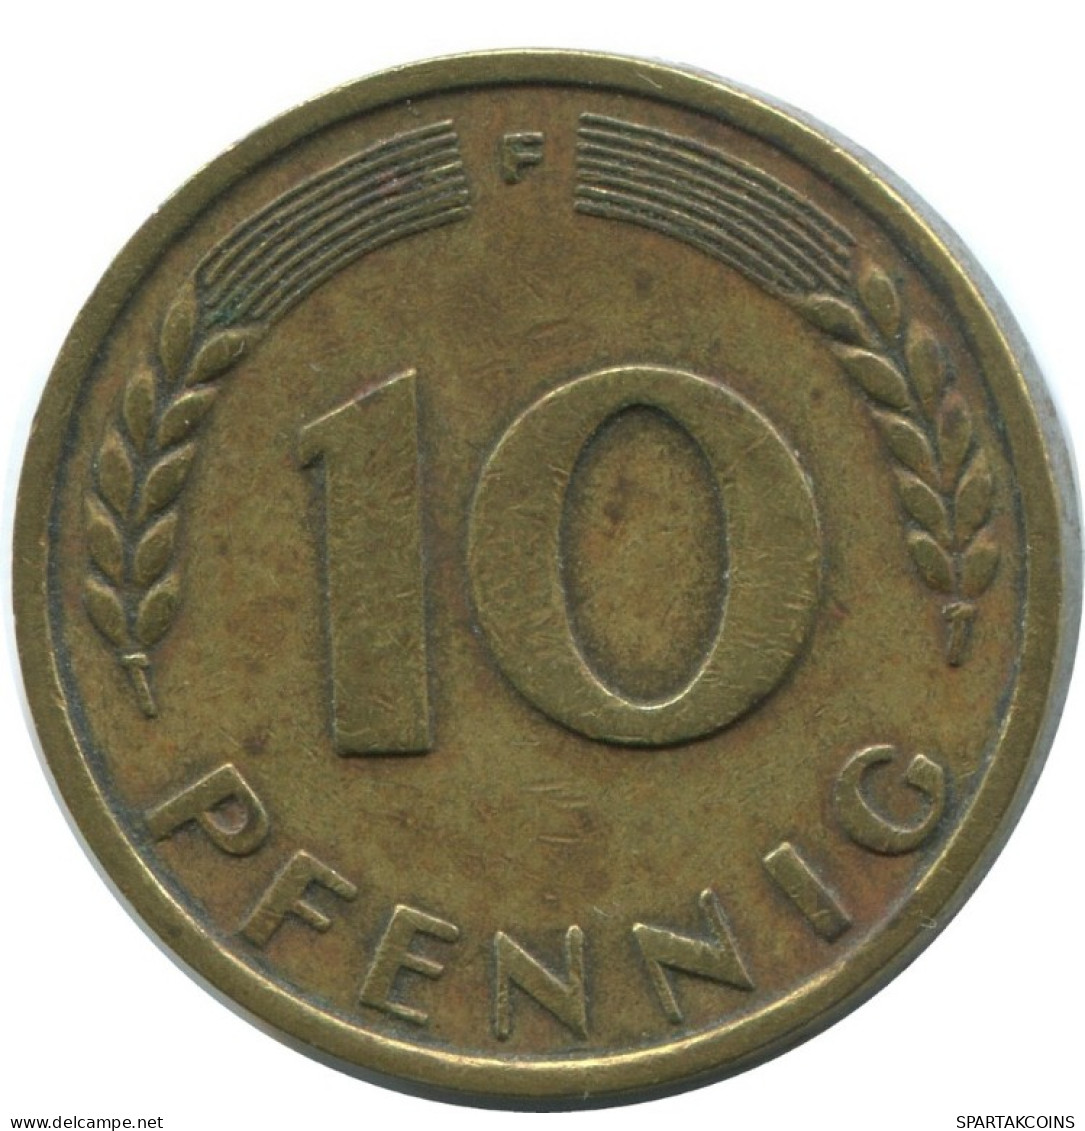 10 PFENNIG 1950 F BRD DEUTSCHLAND Münze GERMANY #AD832.9.D.A - 10 Pfennig